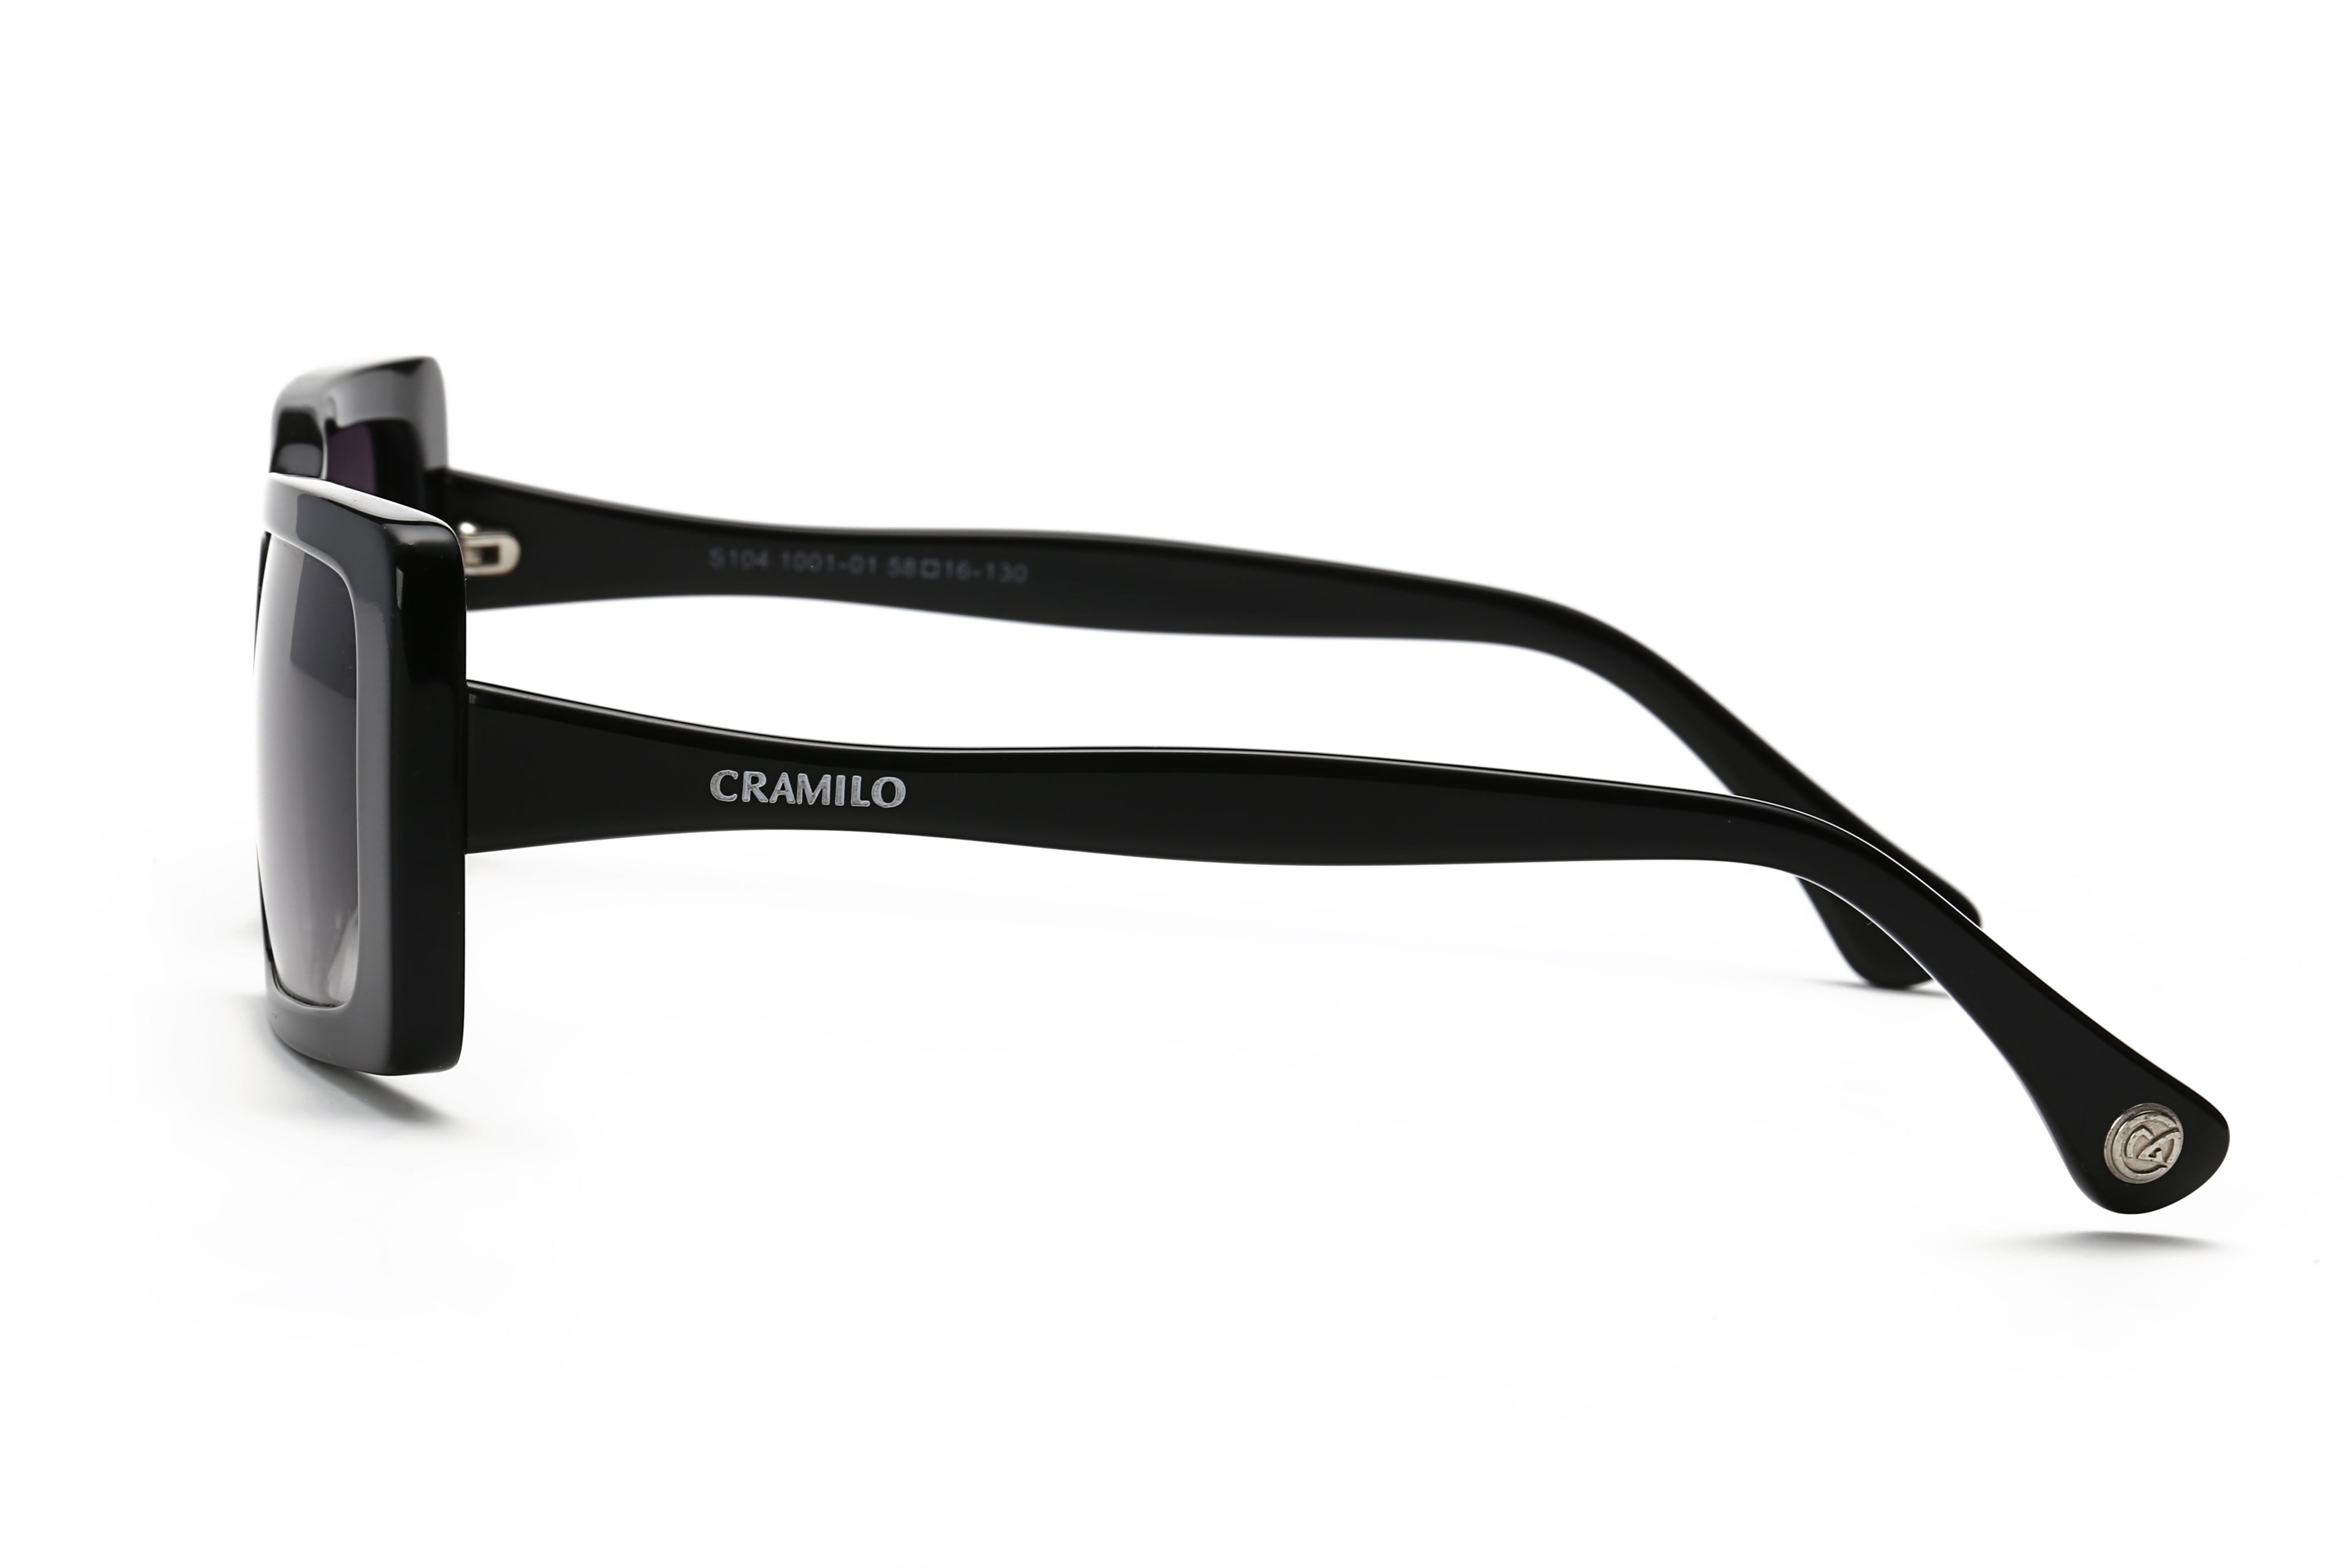 Chanel Rectangle Sunglasses-5435